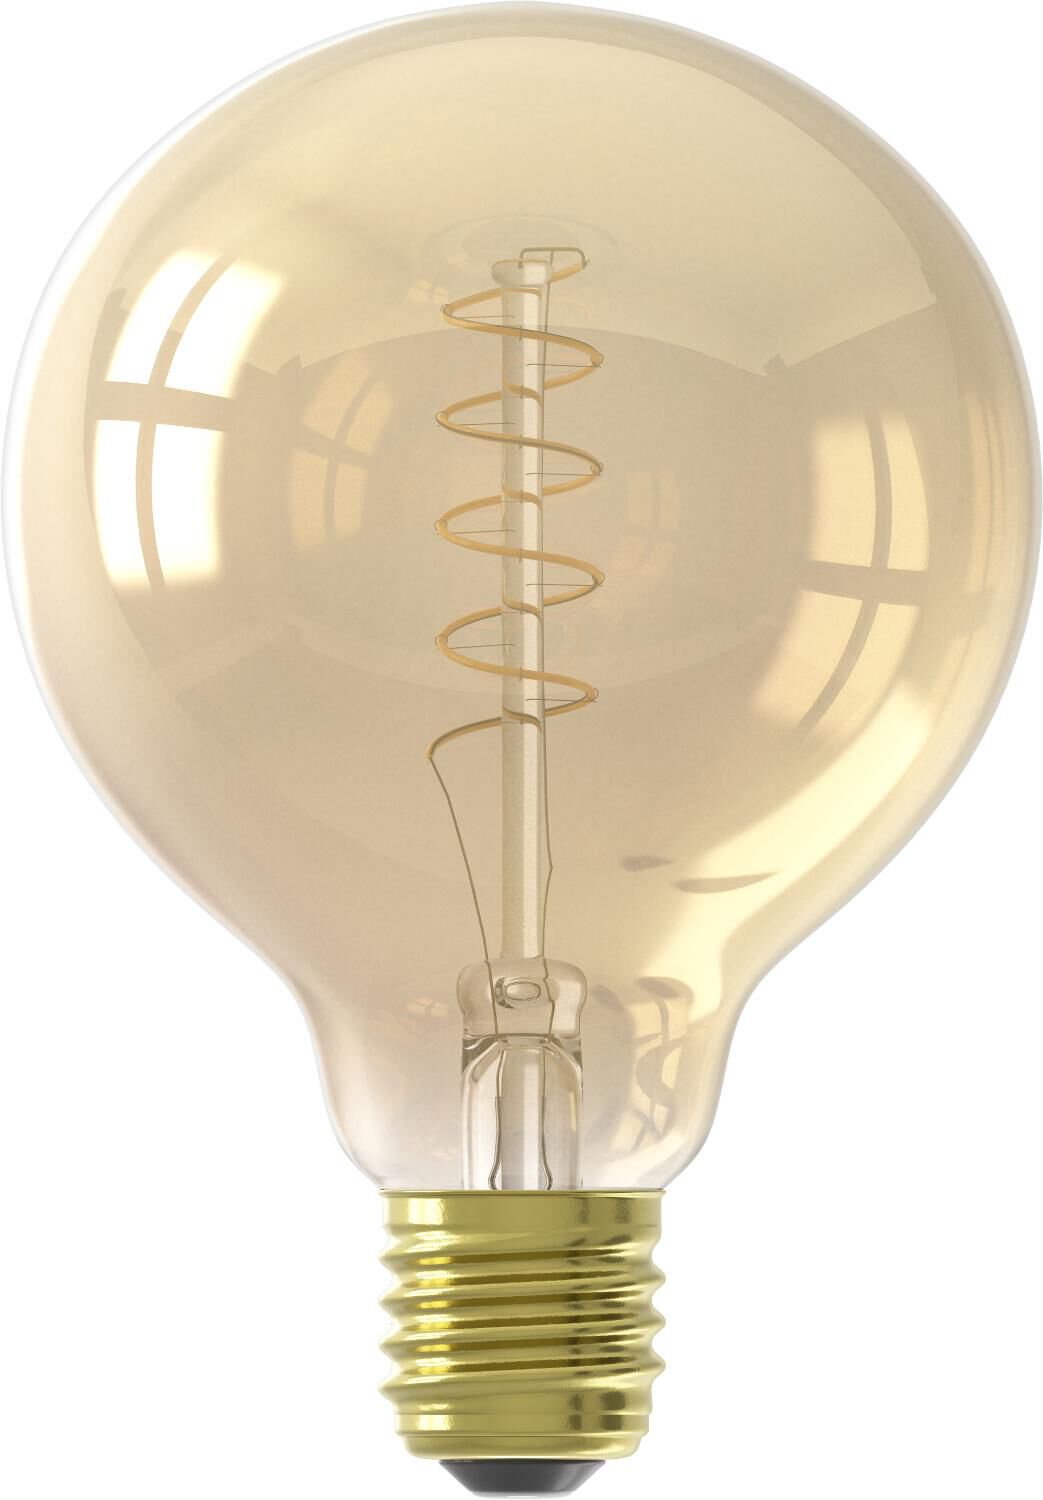 HEMA LED Lamp 4W - 200 Lm - Globe - Goud (goud) van HEMA - Makeover.nl